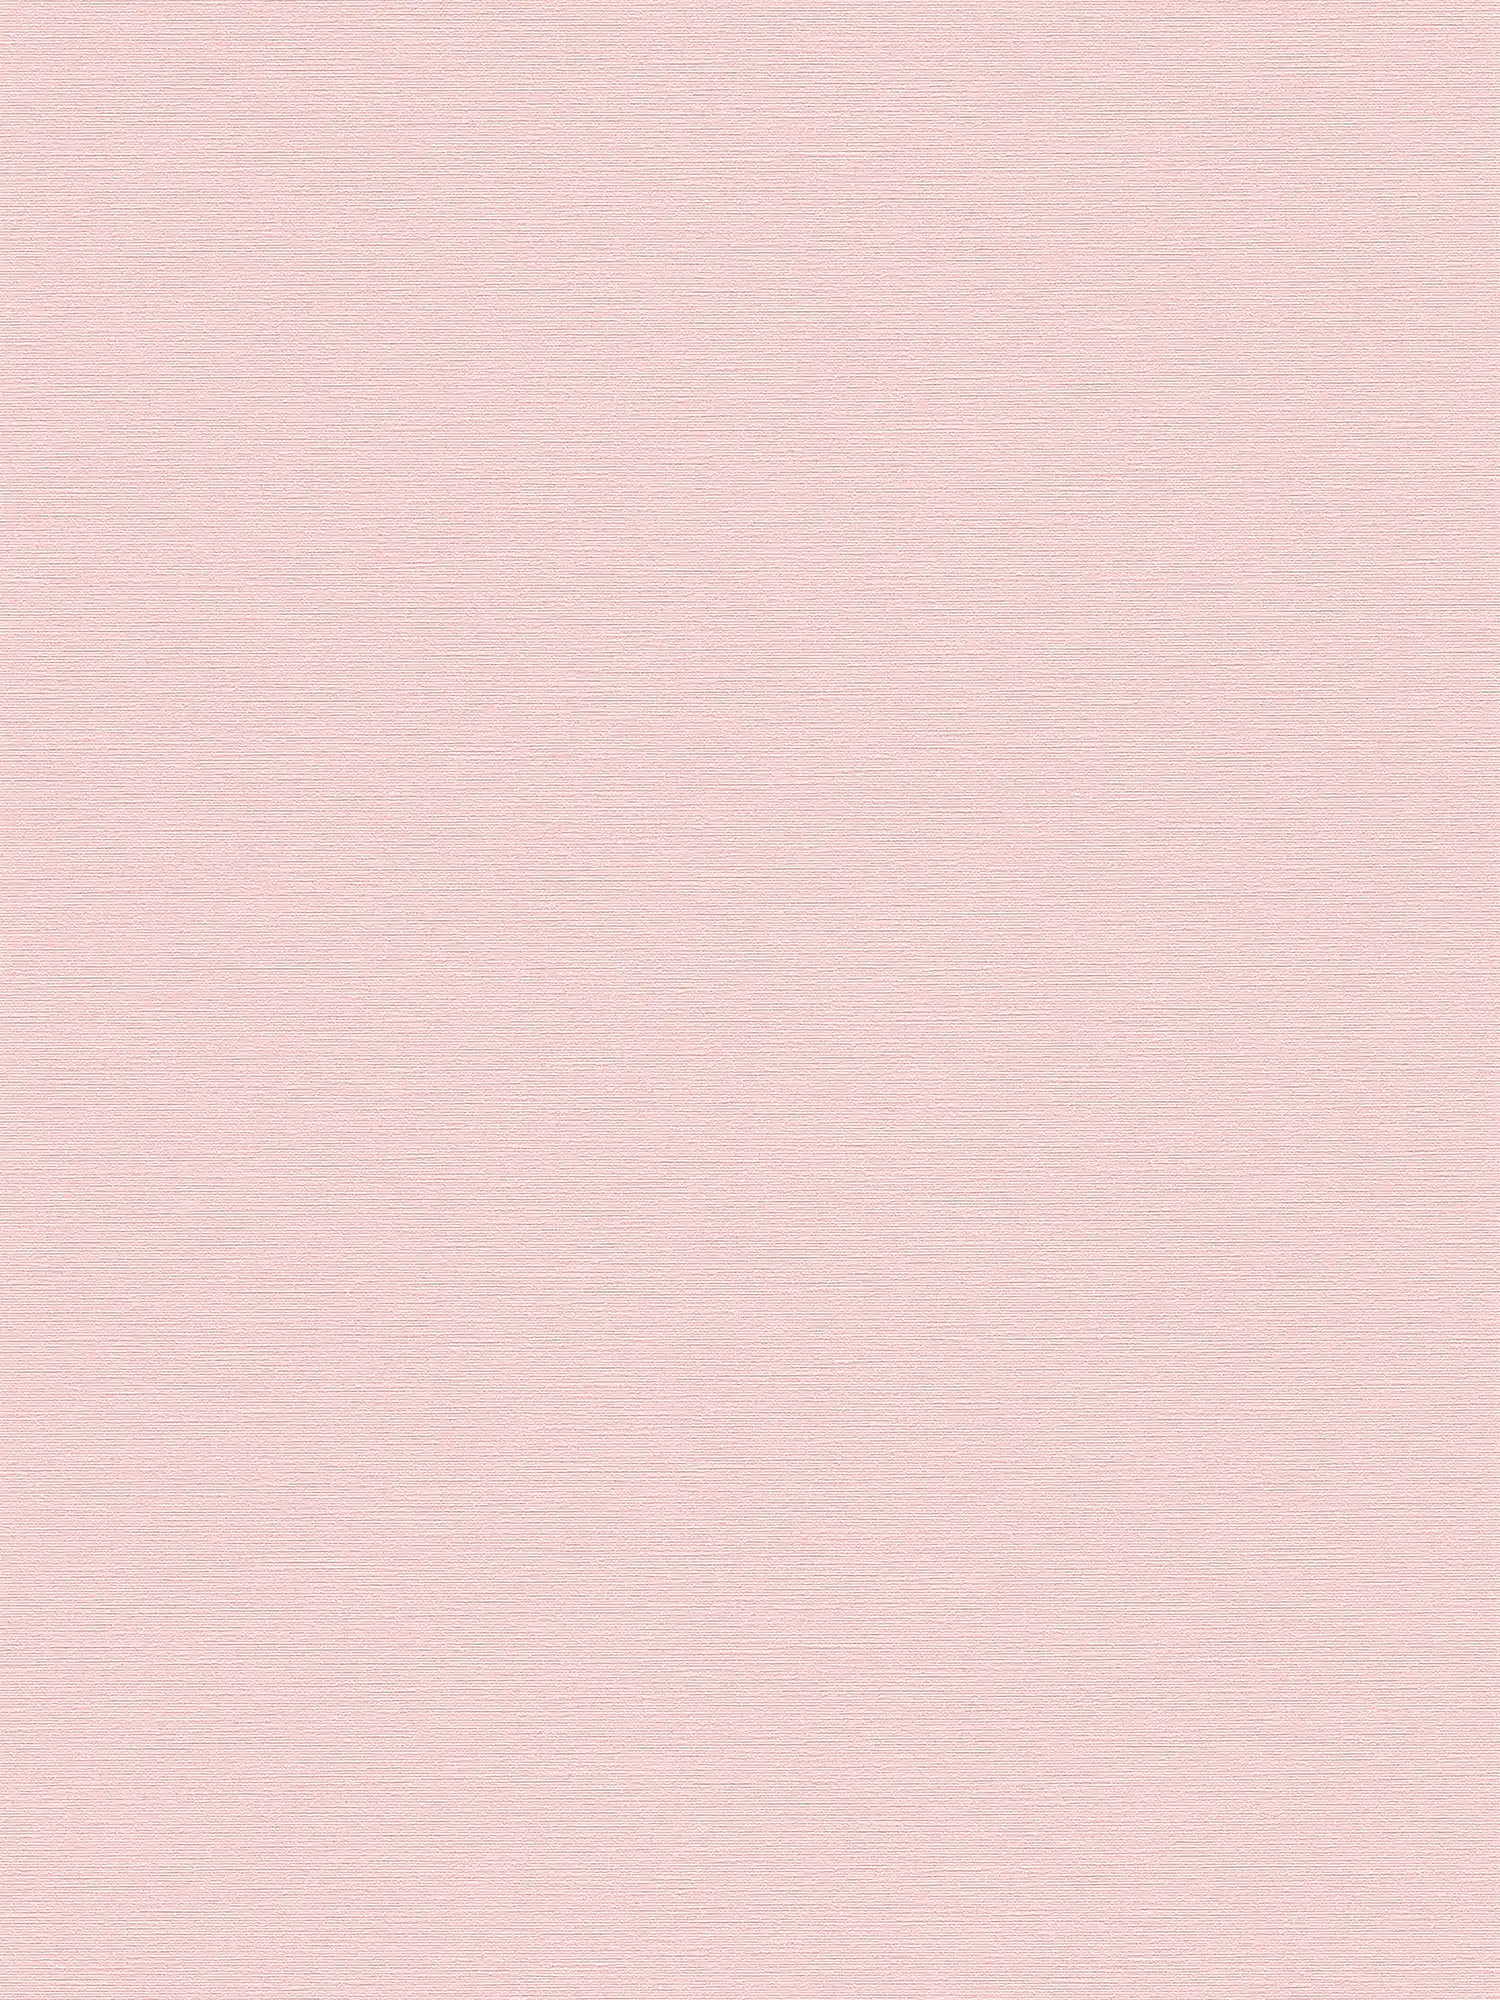 Papel pintado liso no tejido con estructura de lino - rosa claro
